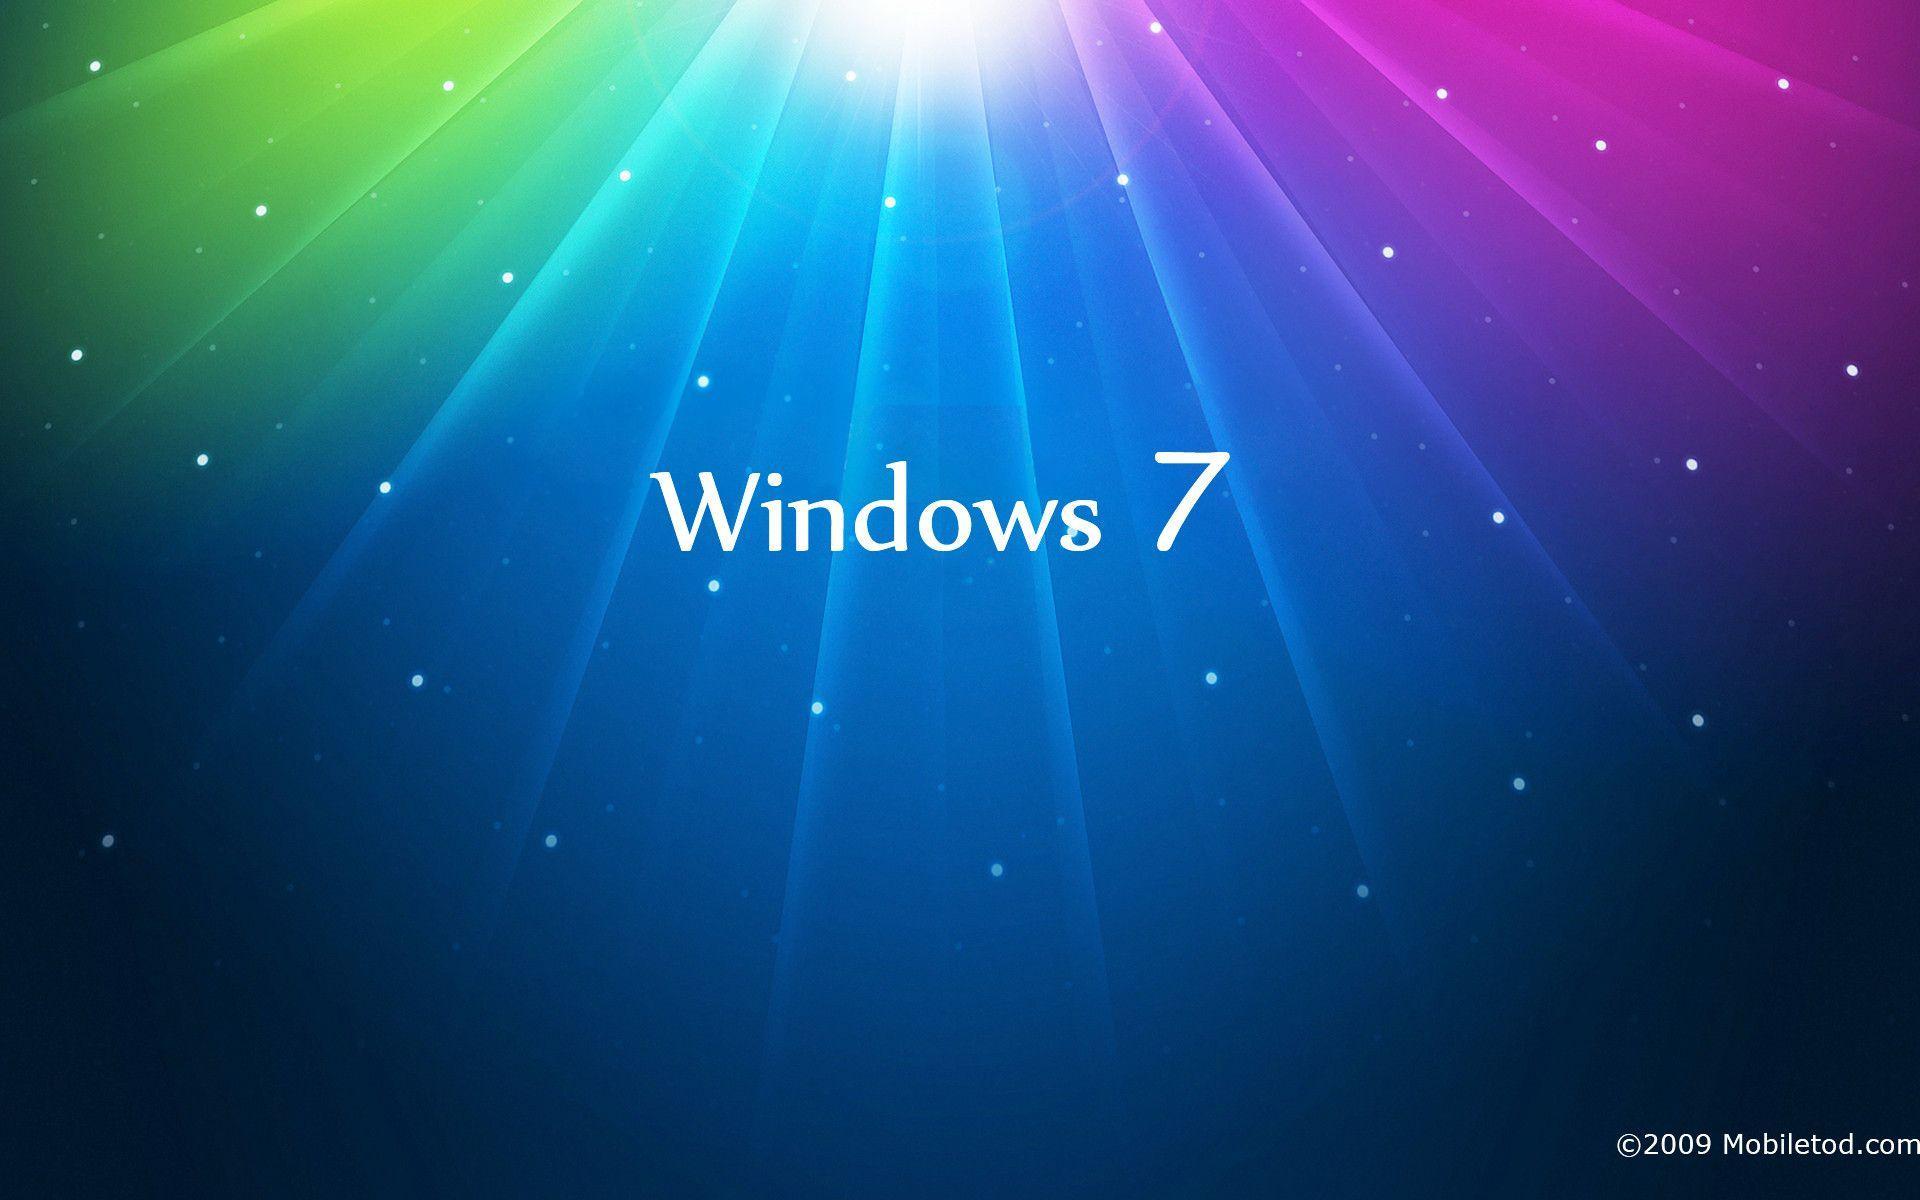 Wonderful HD Windows 7 Wallpaper. TechVela